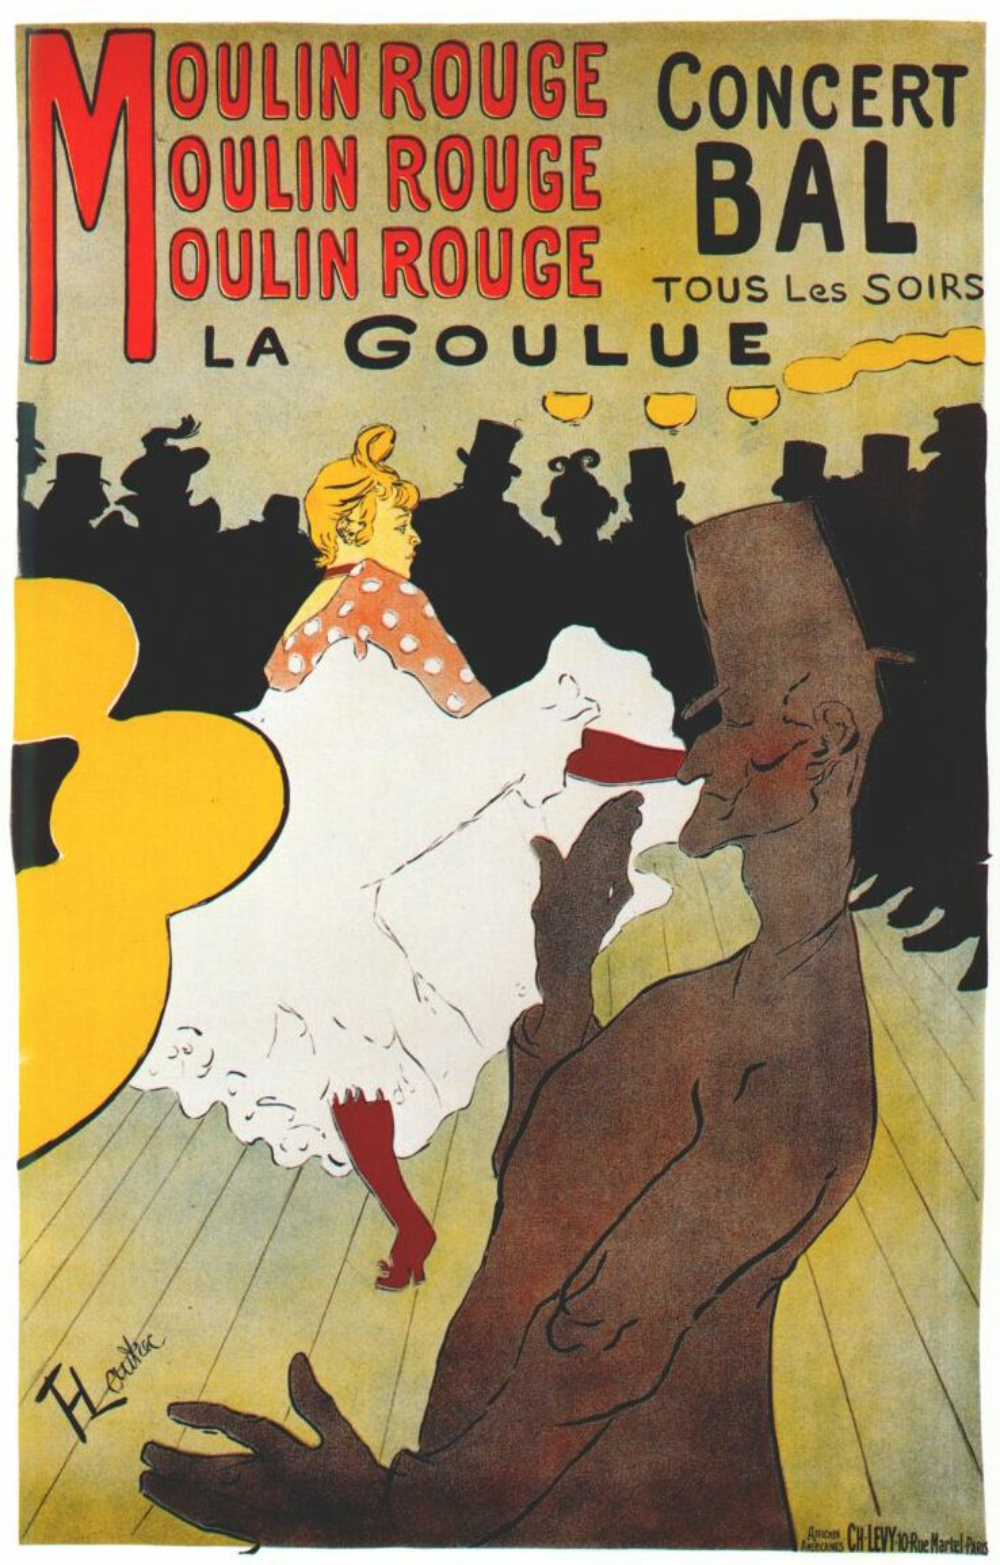 Muere La Goulue, la estrella del Moulin Rouge de Josep Oller